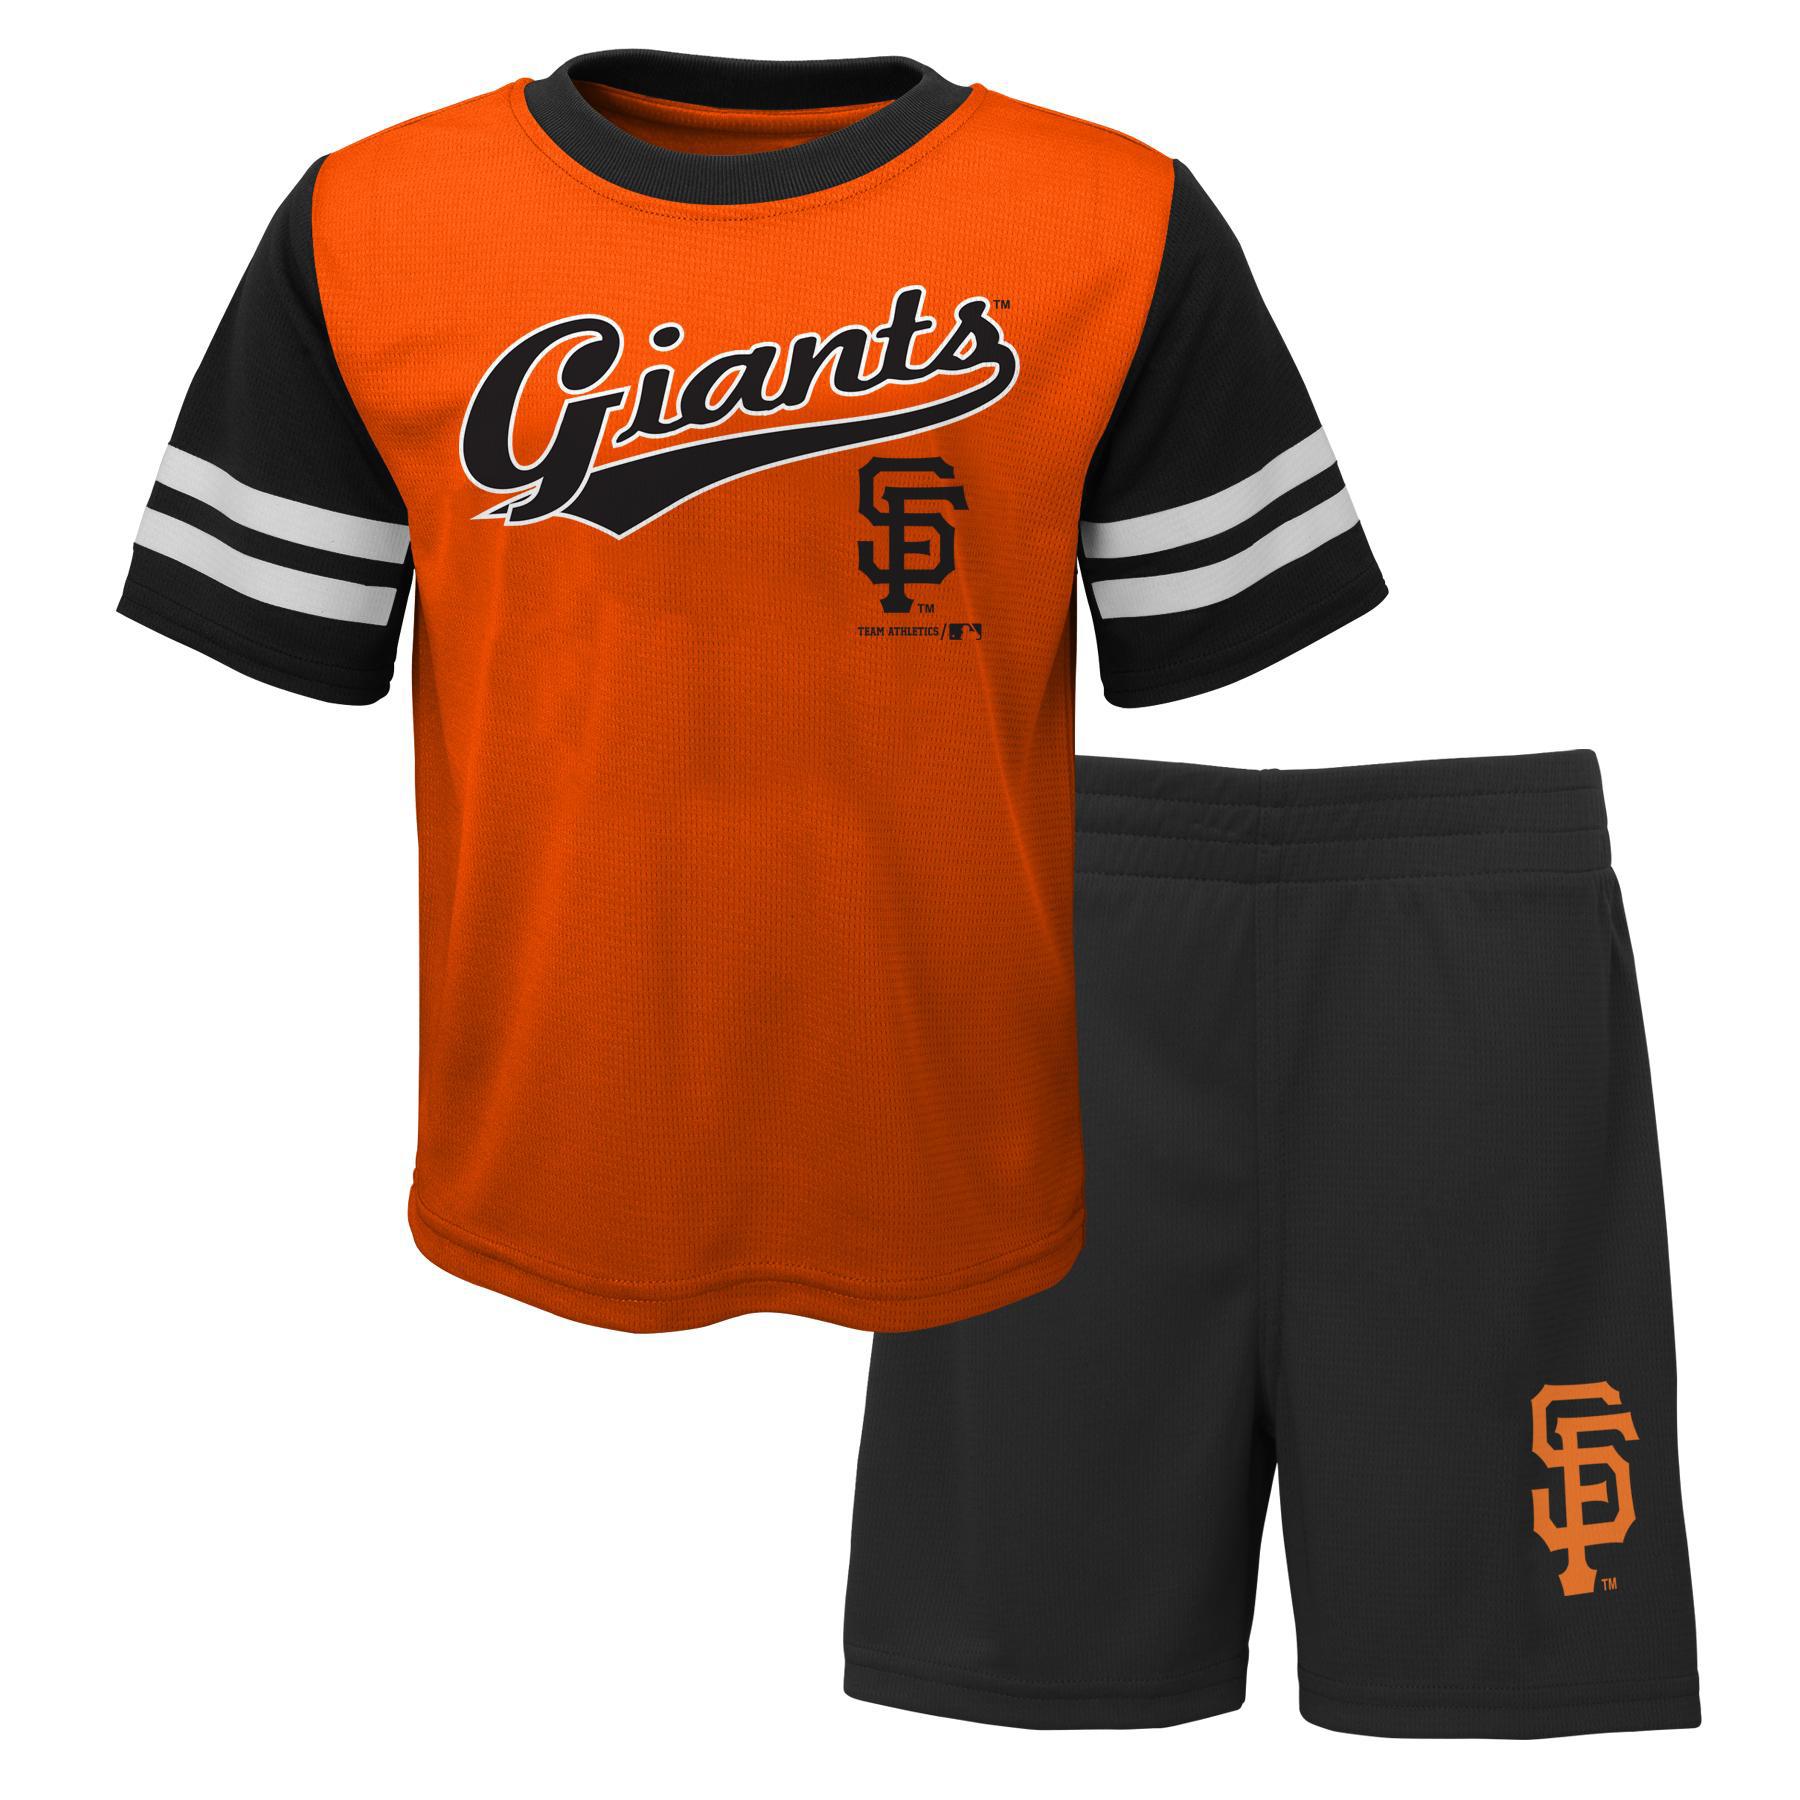 MLB Infant & Toddler Boy's T-Shirt & Shorts - San Francisco Giants